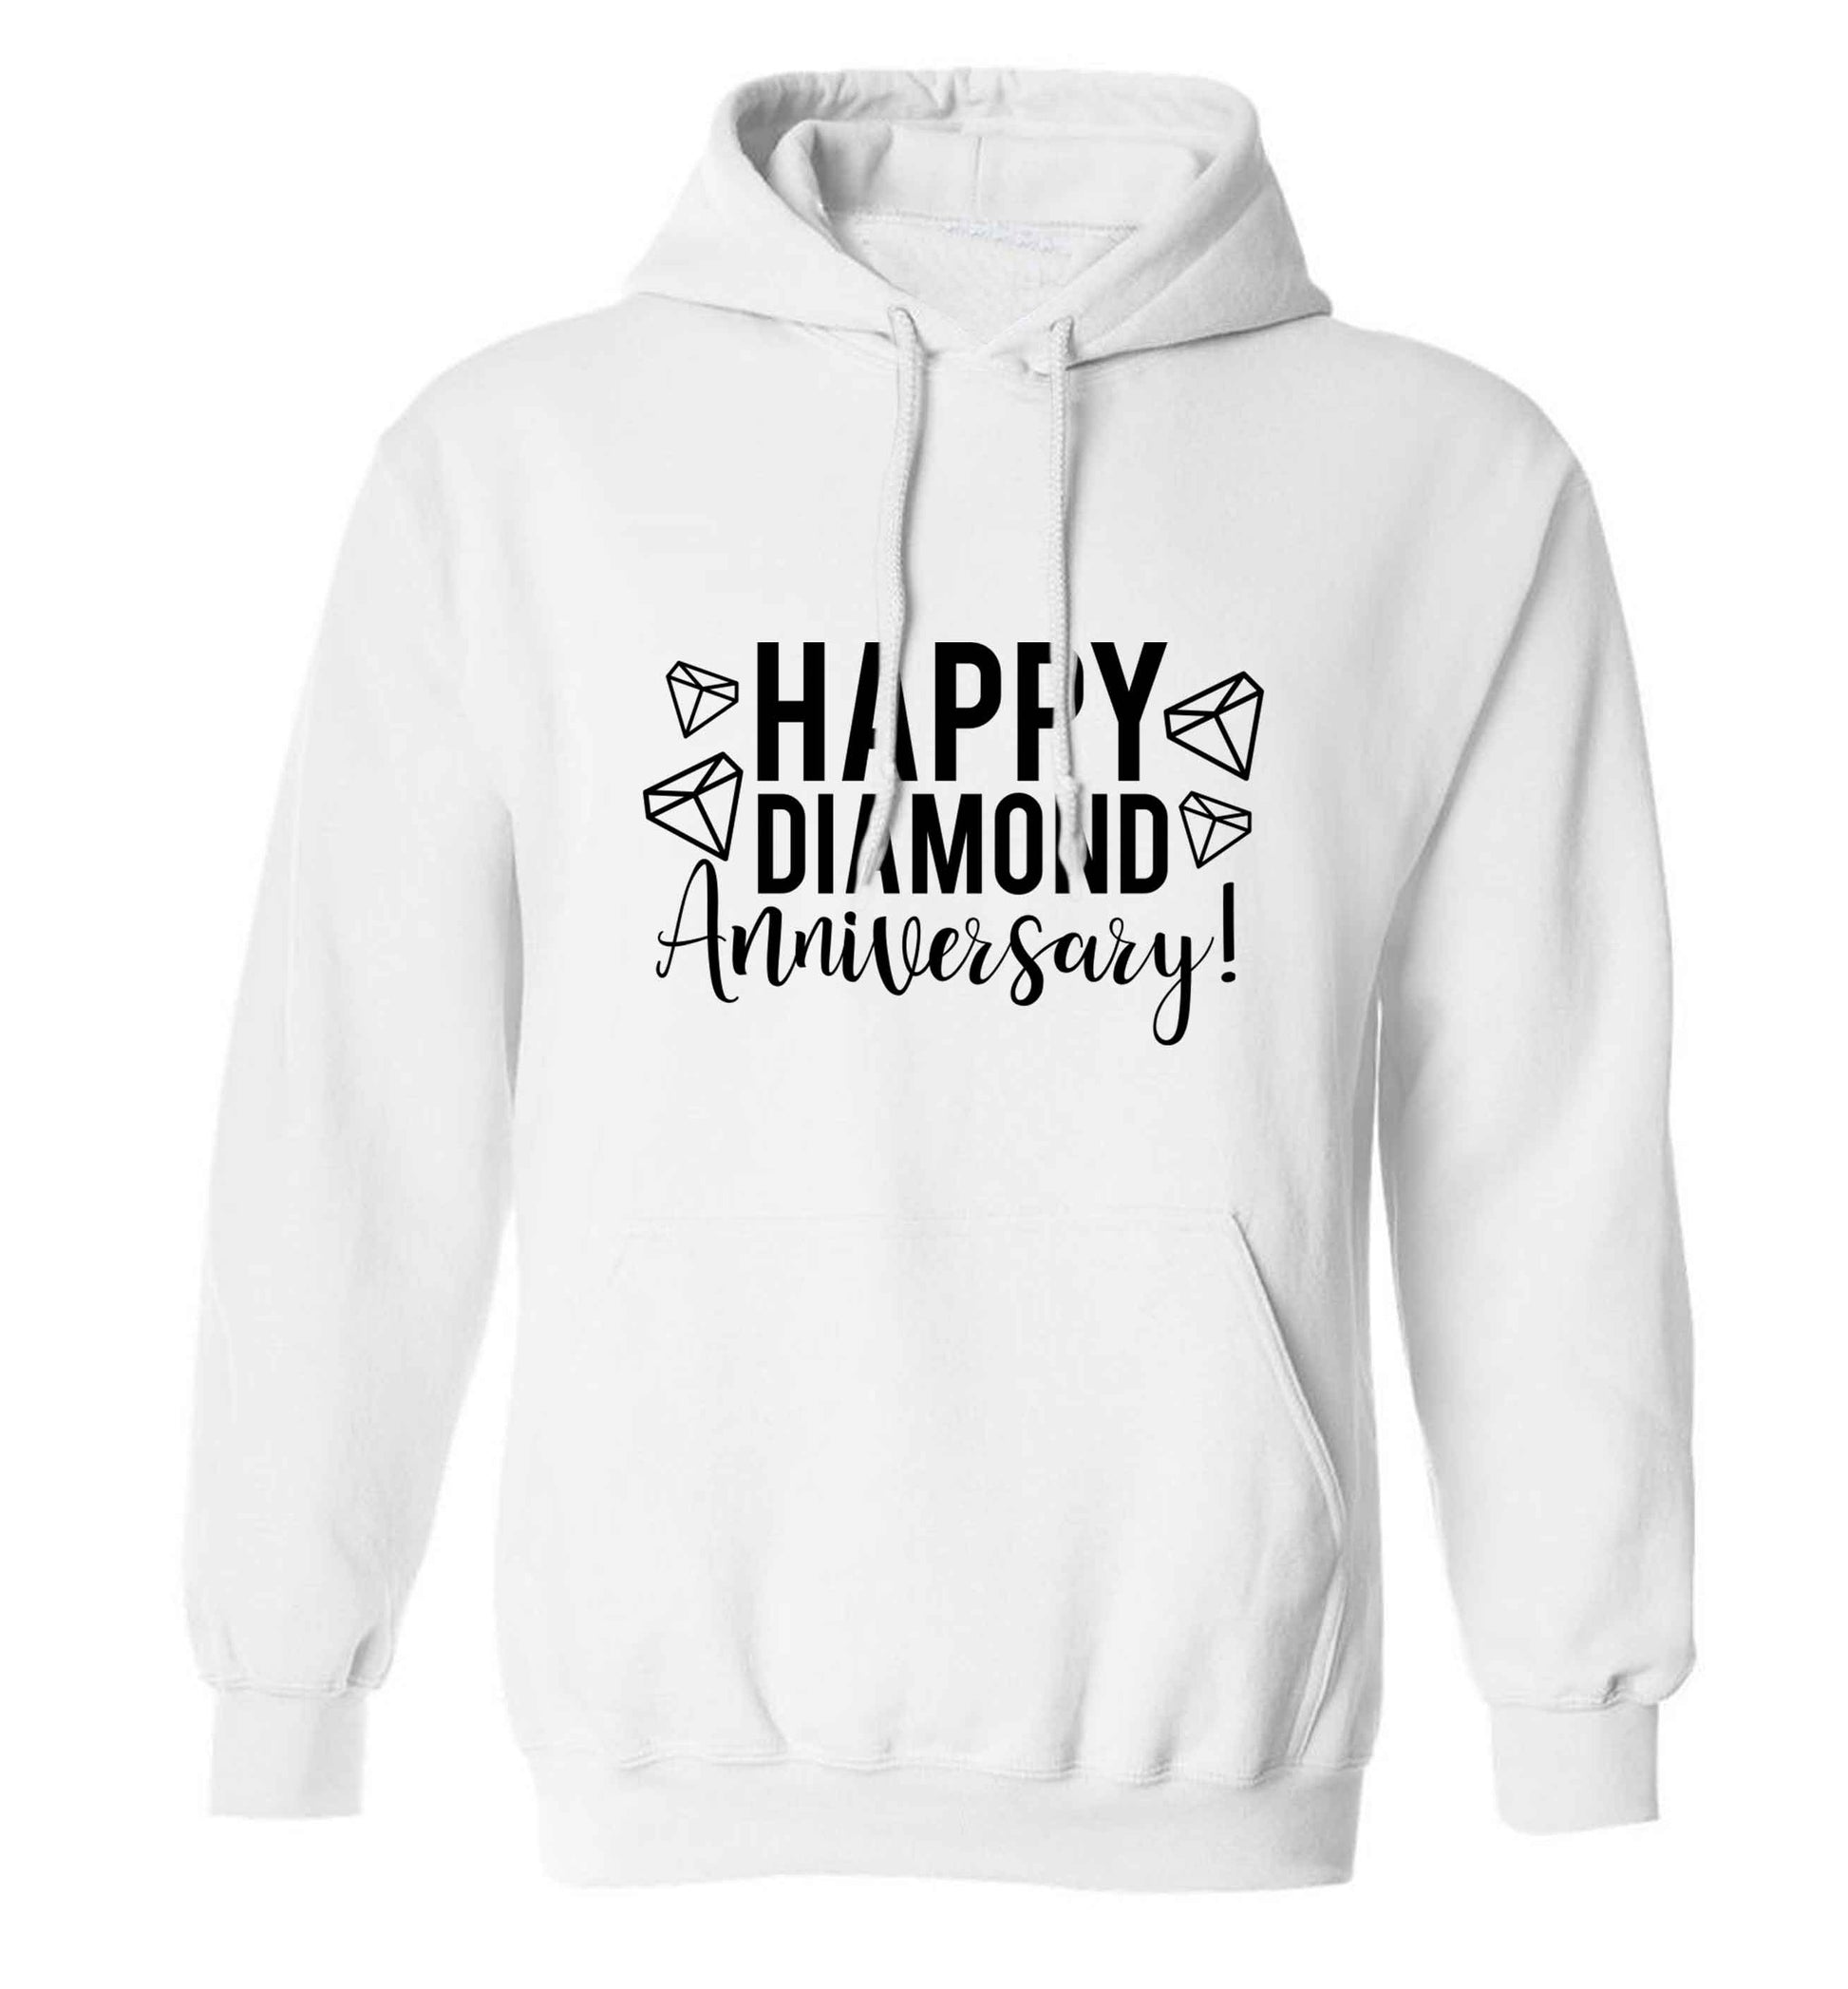 Happy diamond anniversary! adults unisex white hoodie 2XL